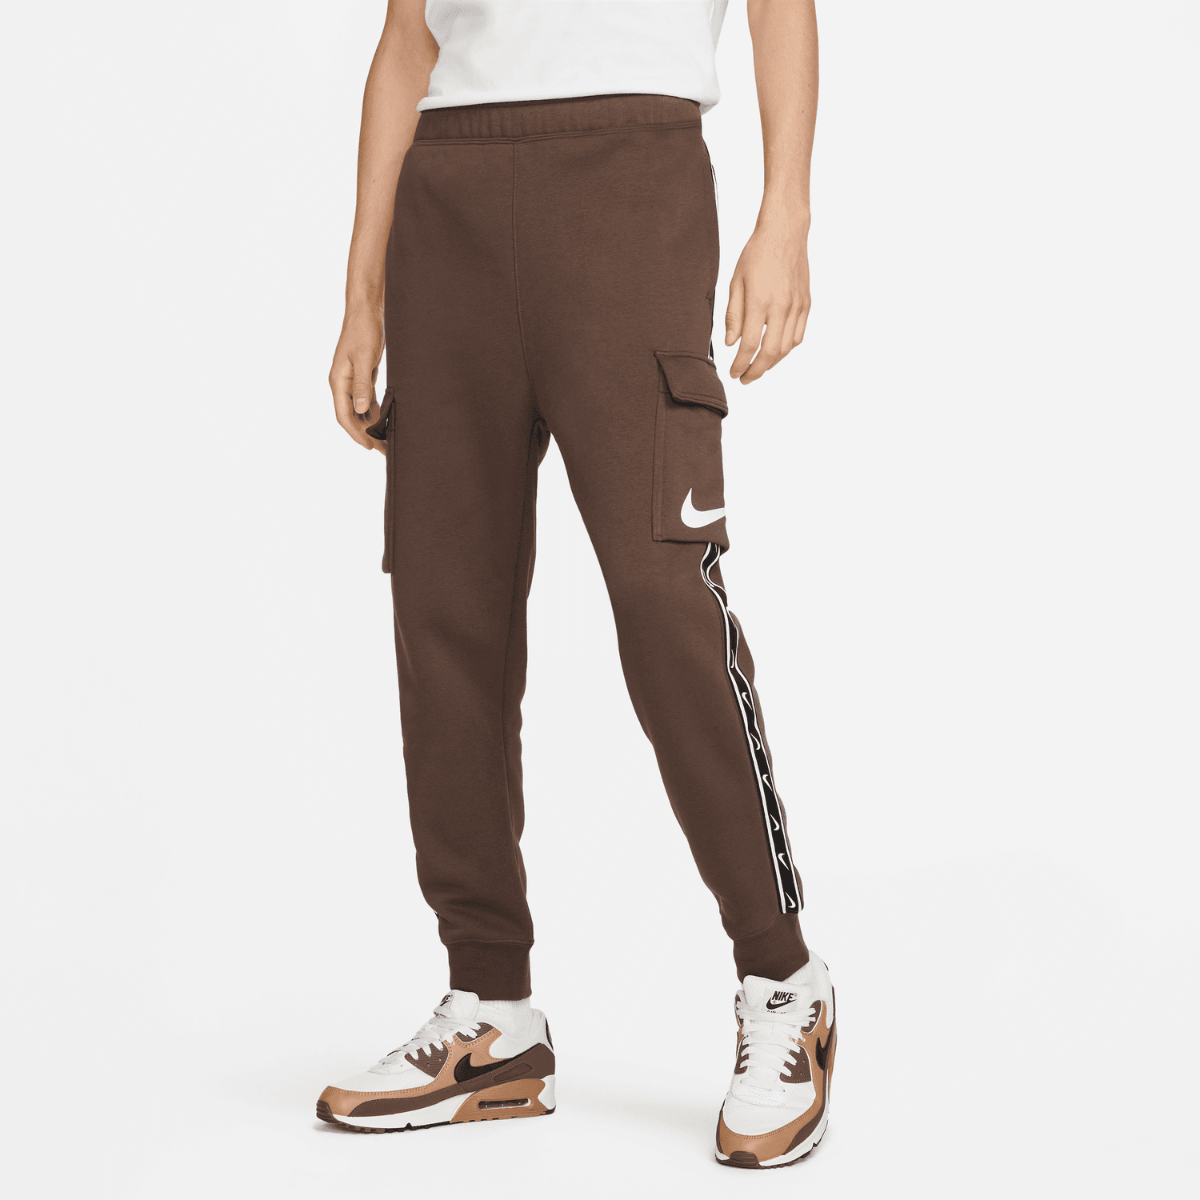 Pantalon Nike Sportswear Repeat - Marron/Blanc/Noir